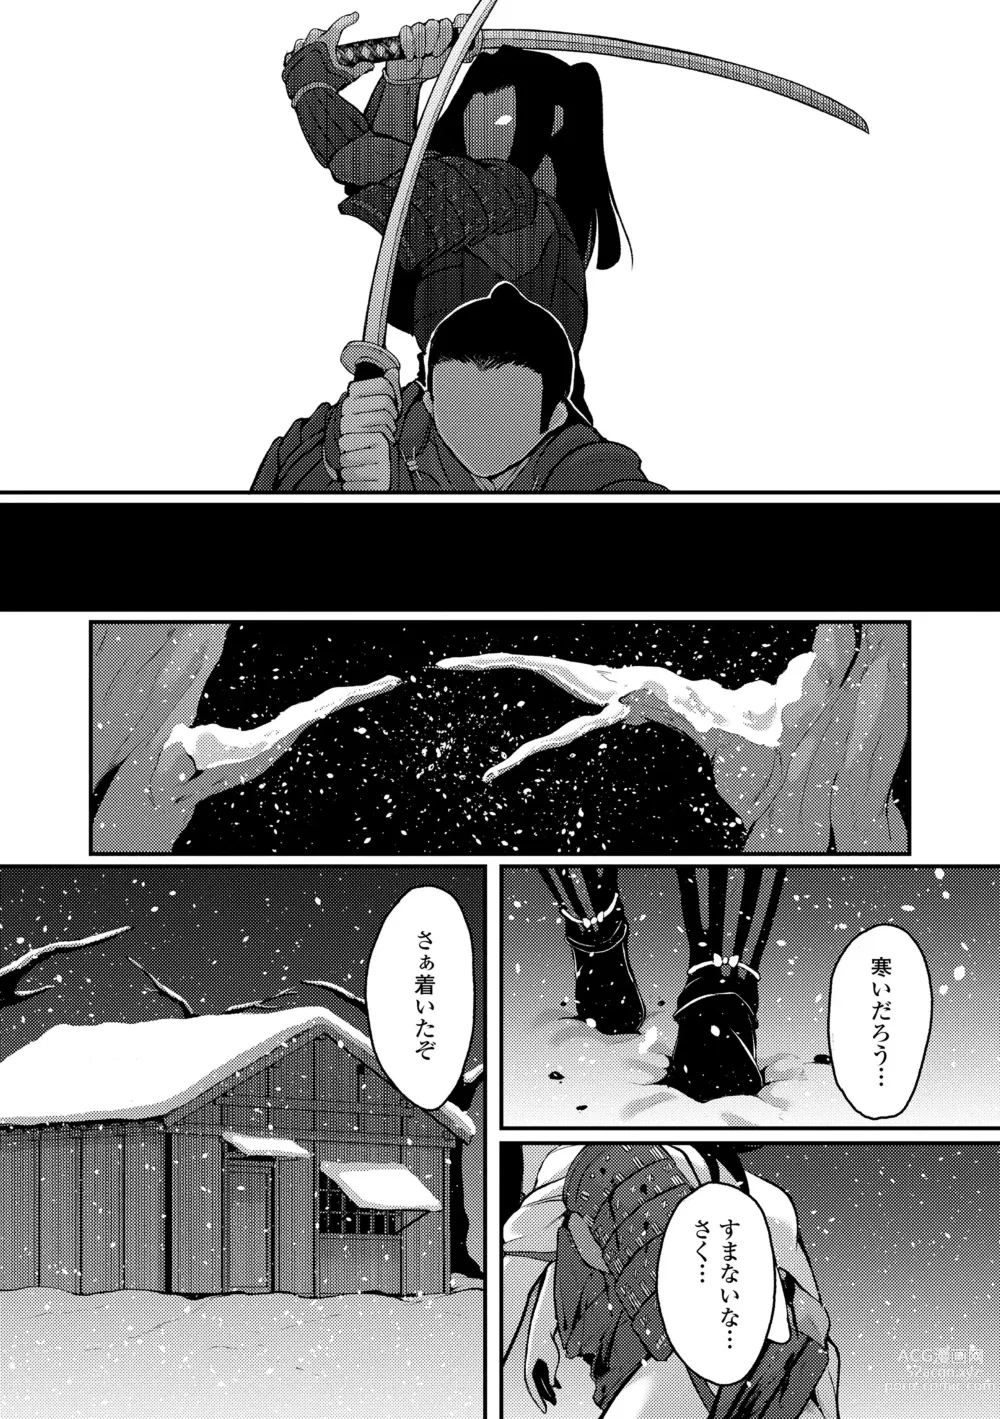 Page 205 of manga Hitoyo Hitoyo Ouse no Mamani